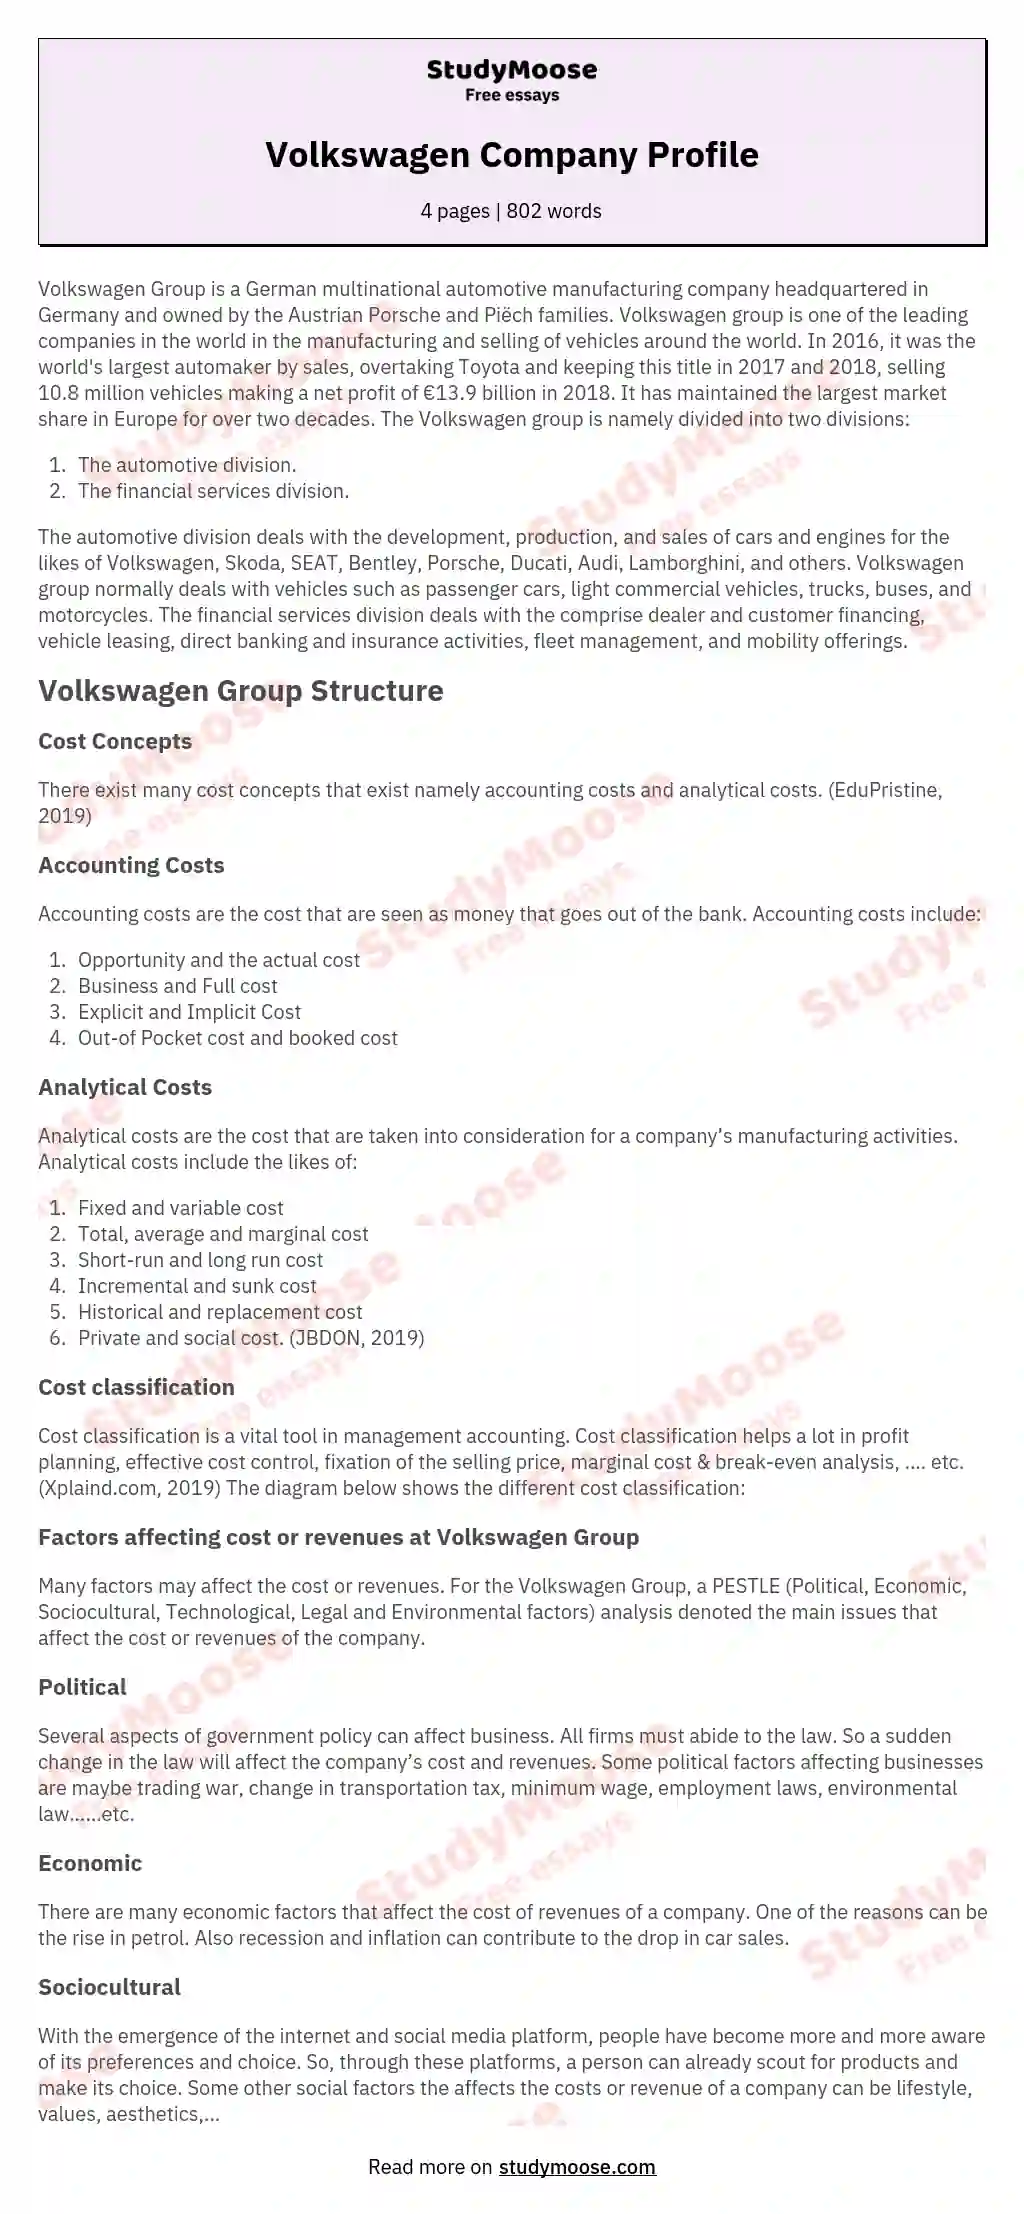 Volkswagen Company Profile essay